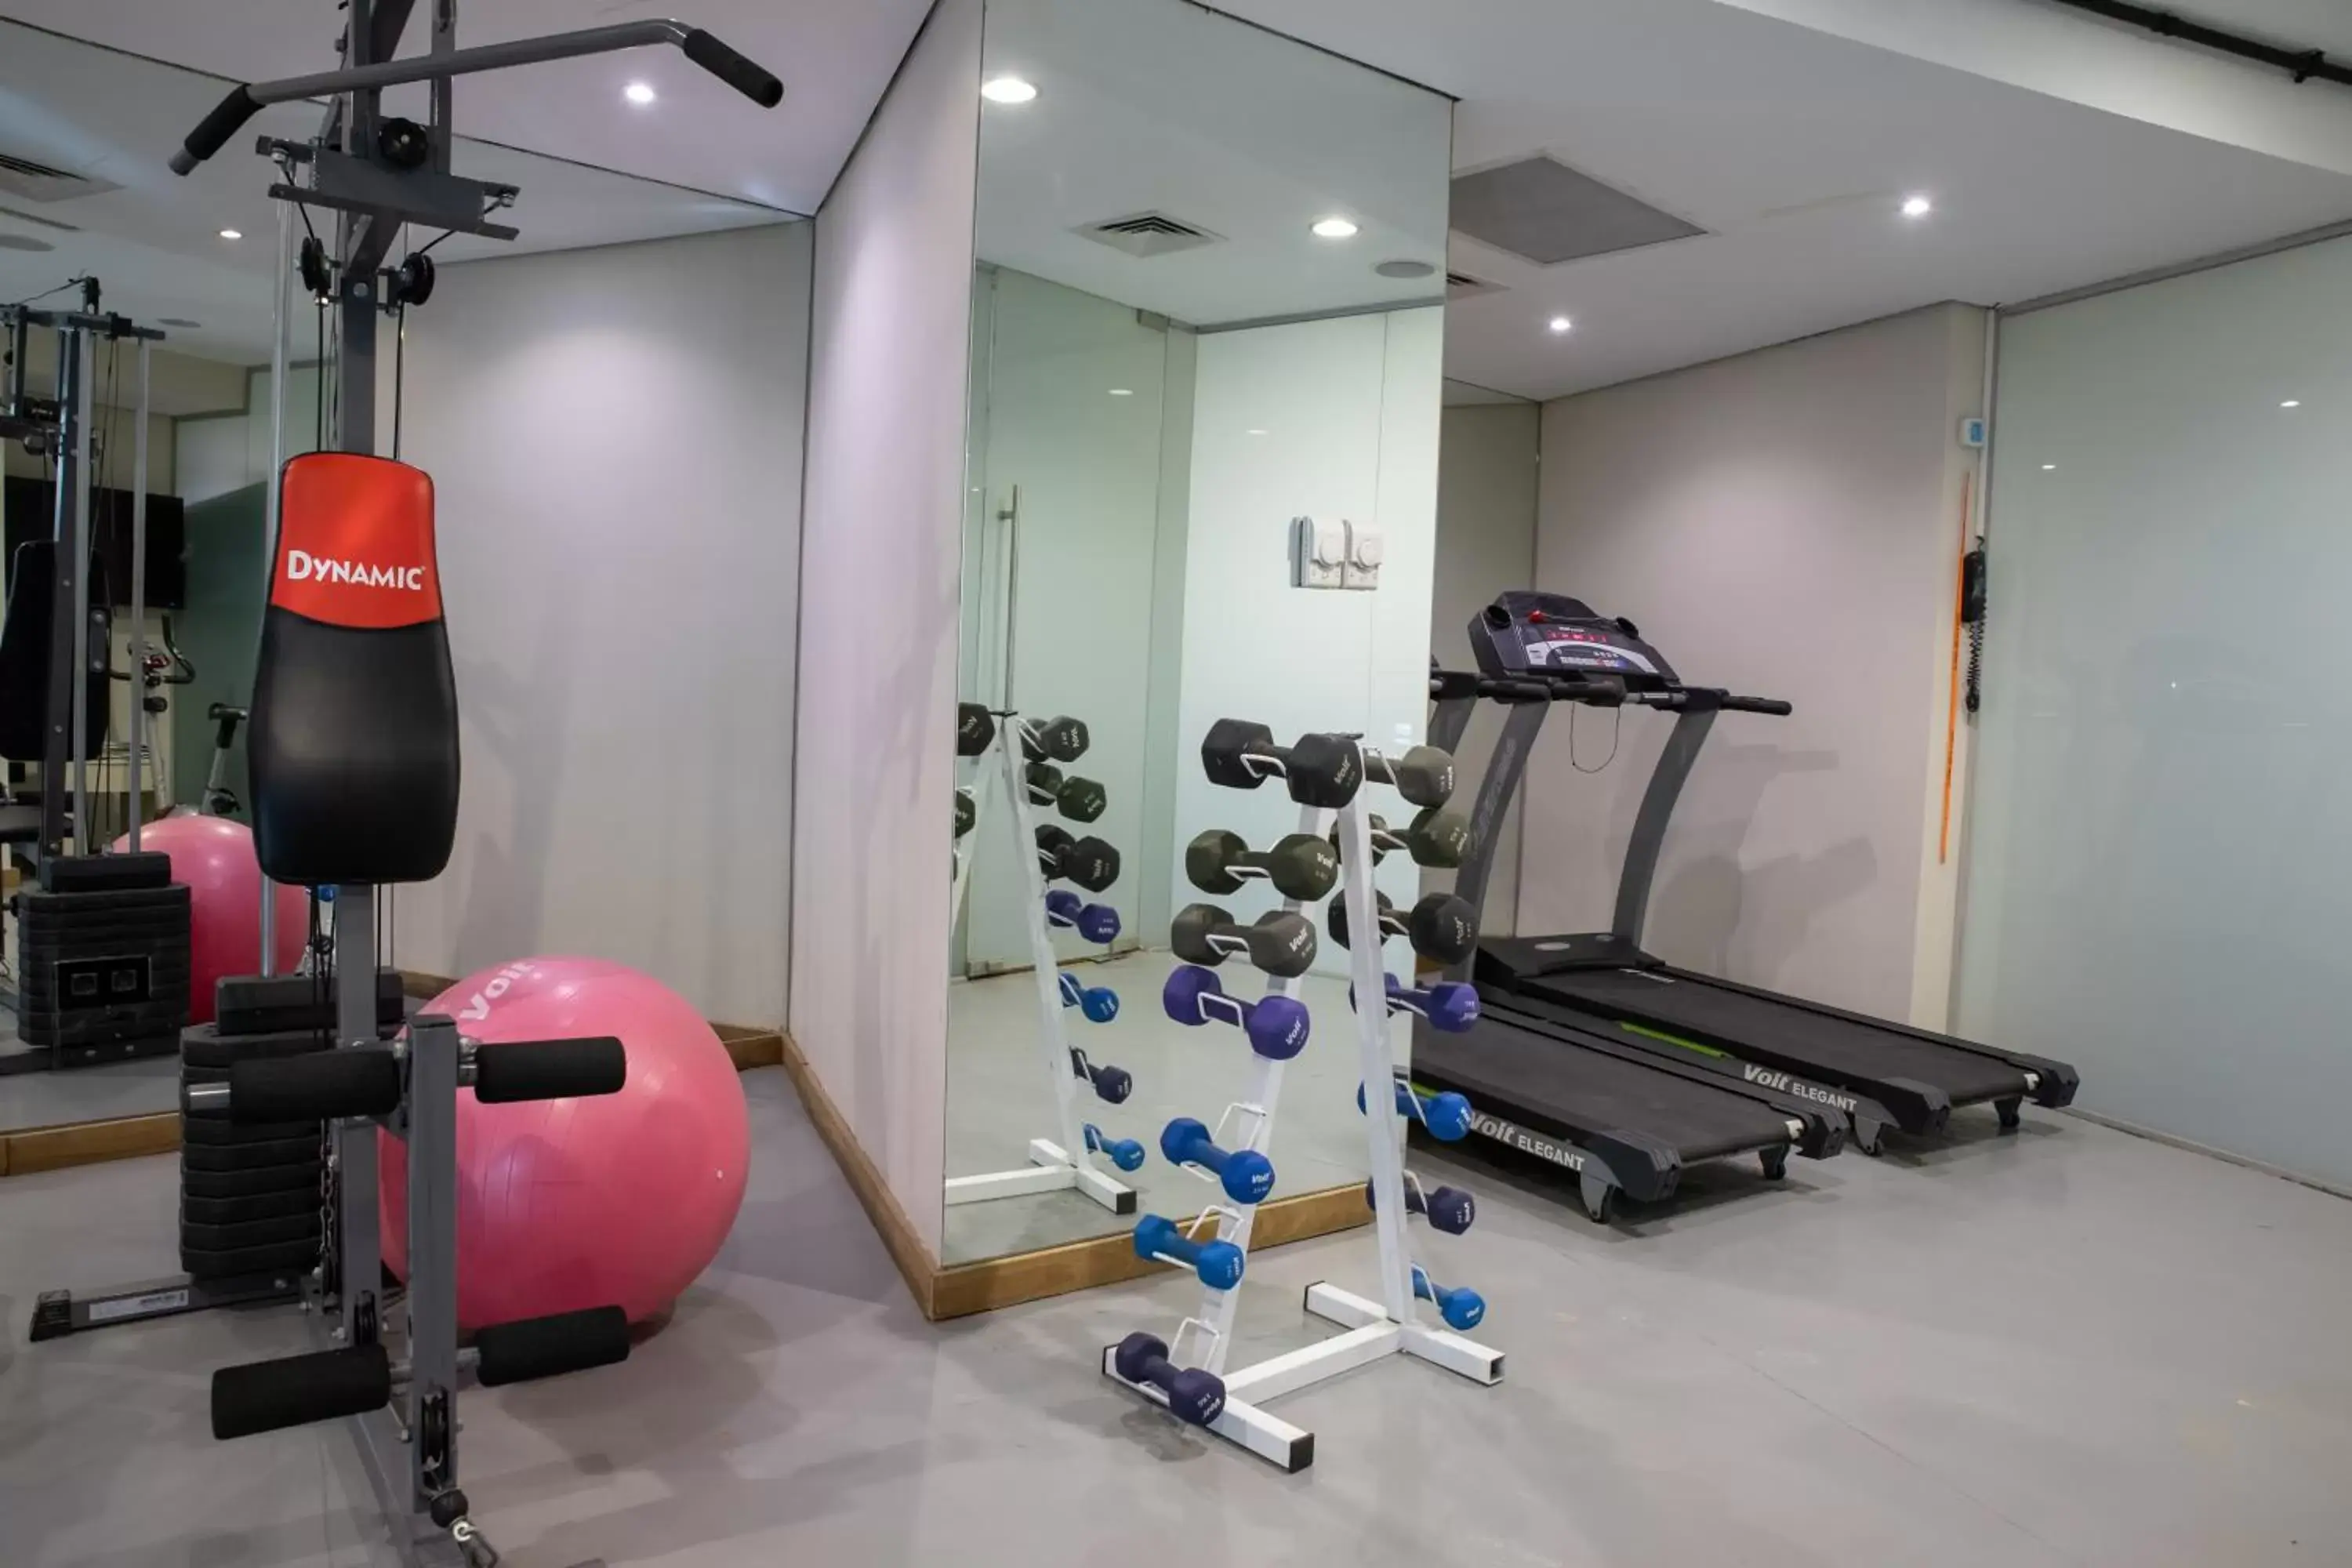 Fitness centre/facilities, Fitness Center/Facilities in Ramada Istanbul Grand Bazaar